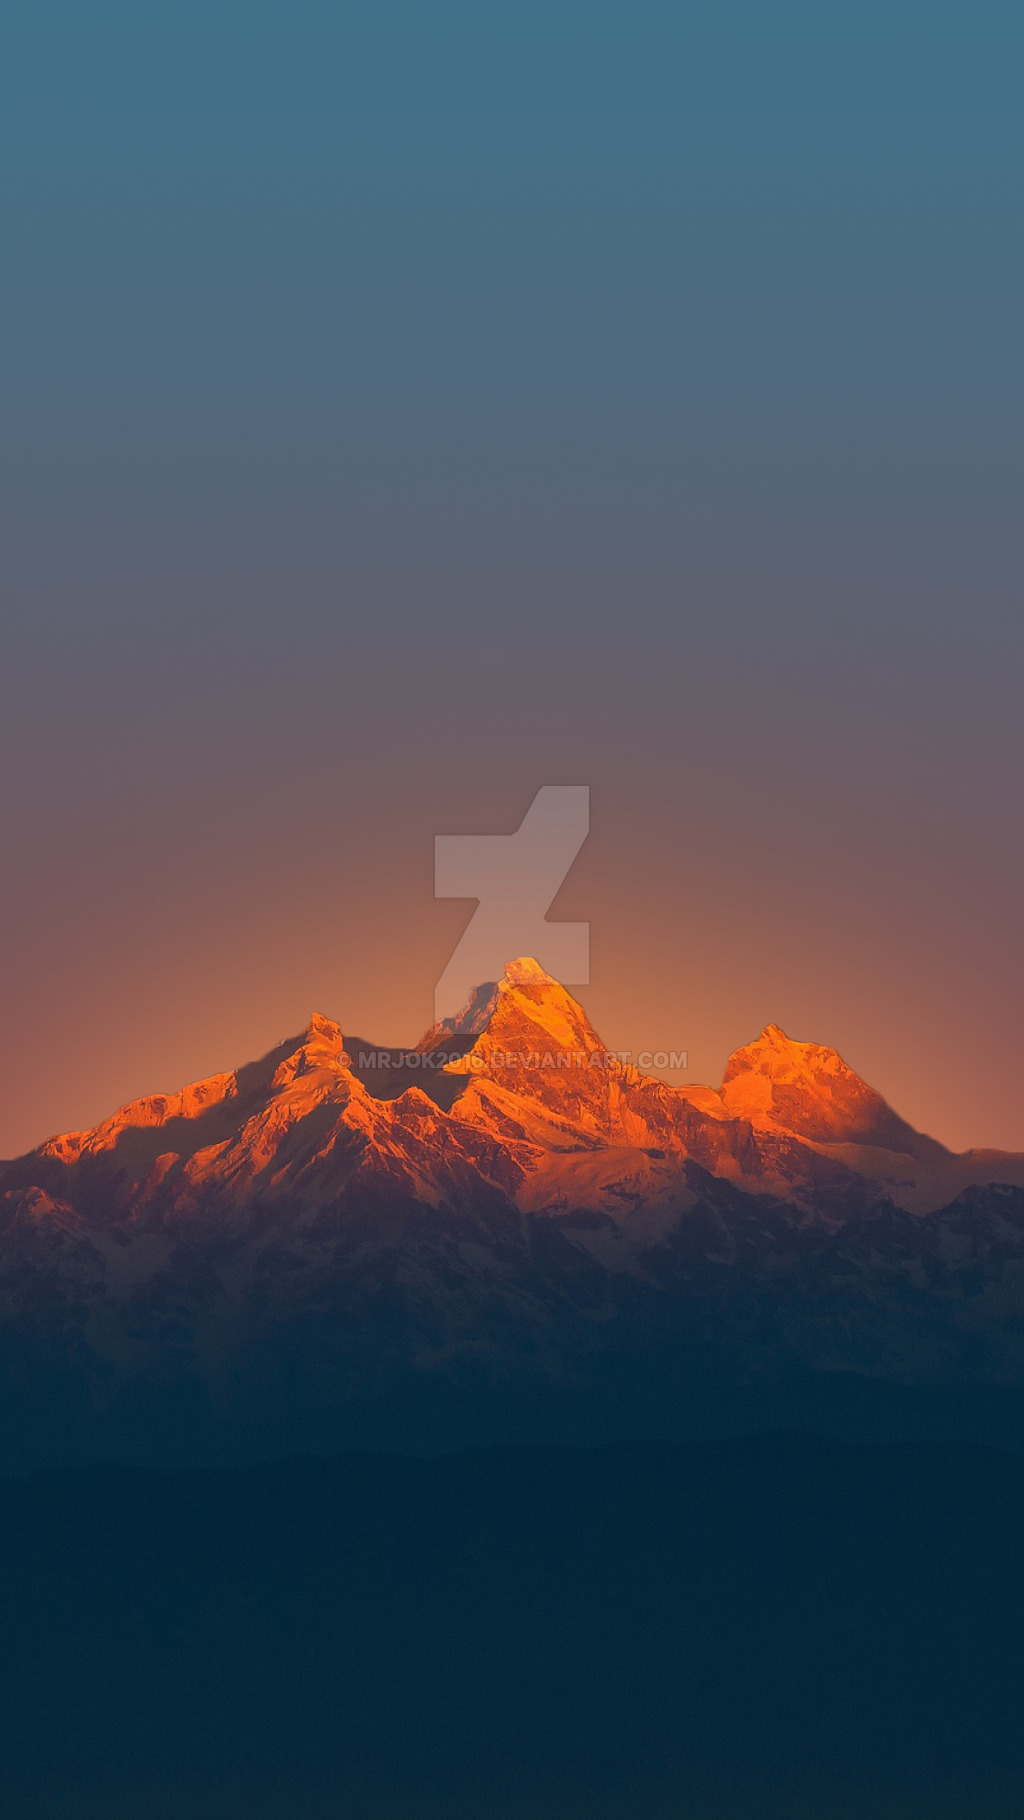 Mountain Range Wallpaper Desktop 4k FHDq Background W